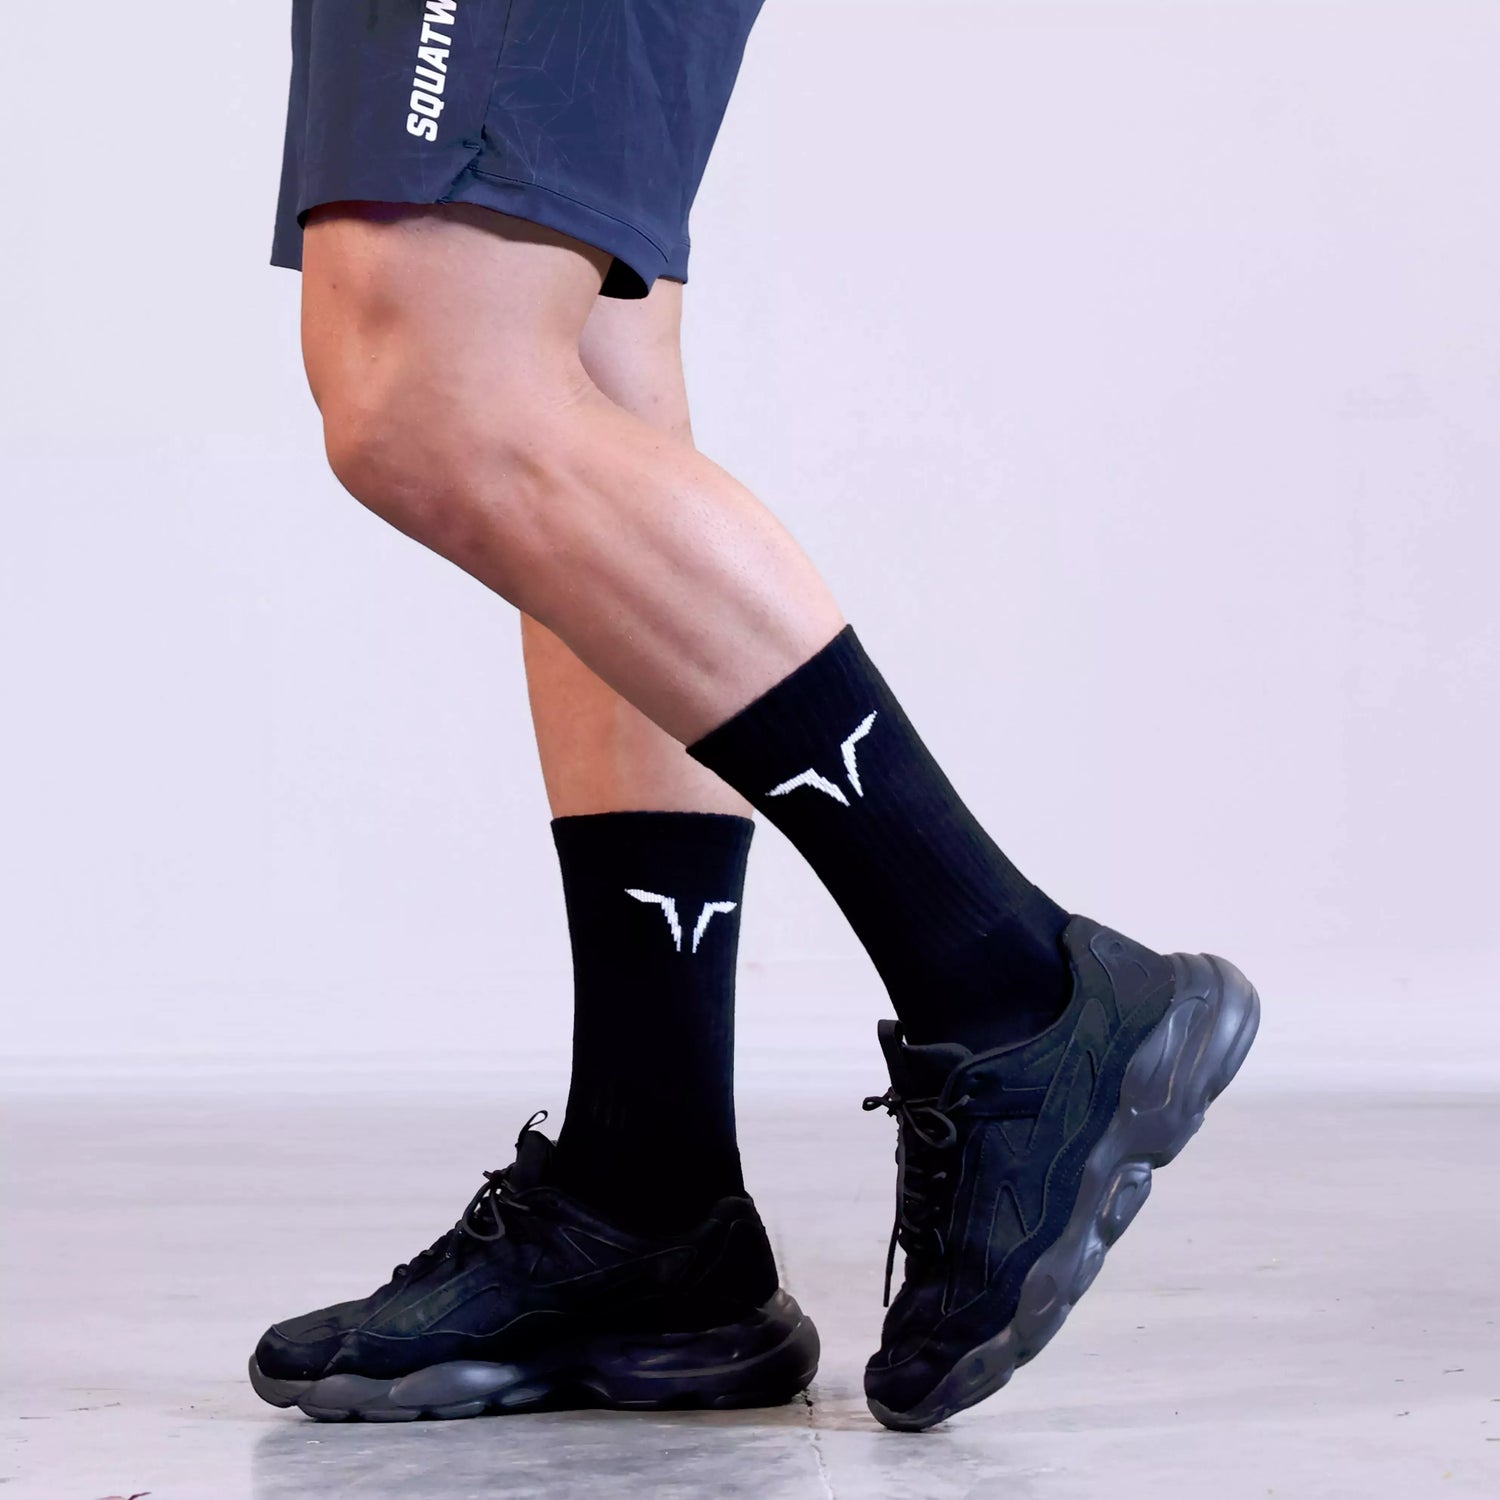 AE, Pack of 3 - Core Crew Socks - Black, Gym Socks